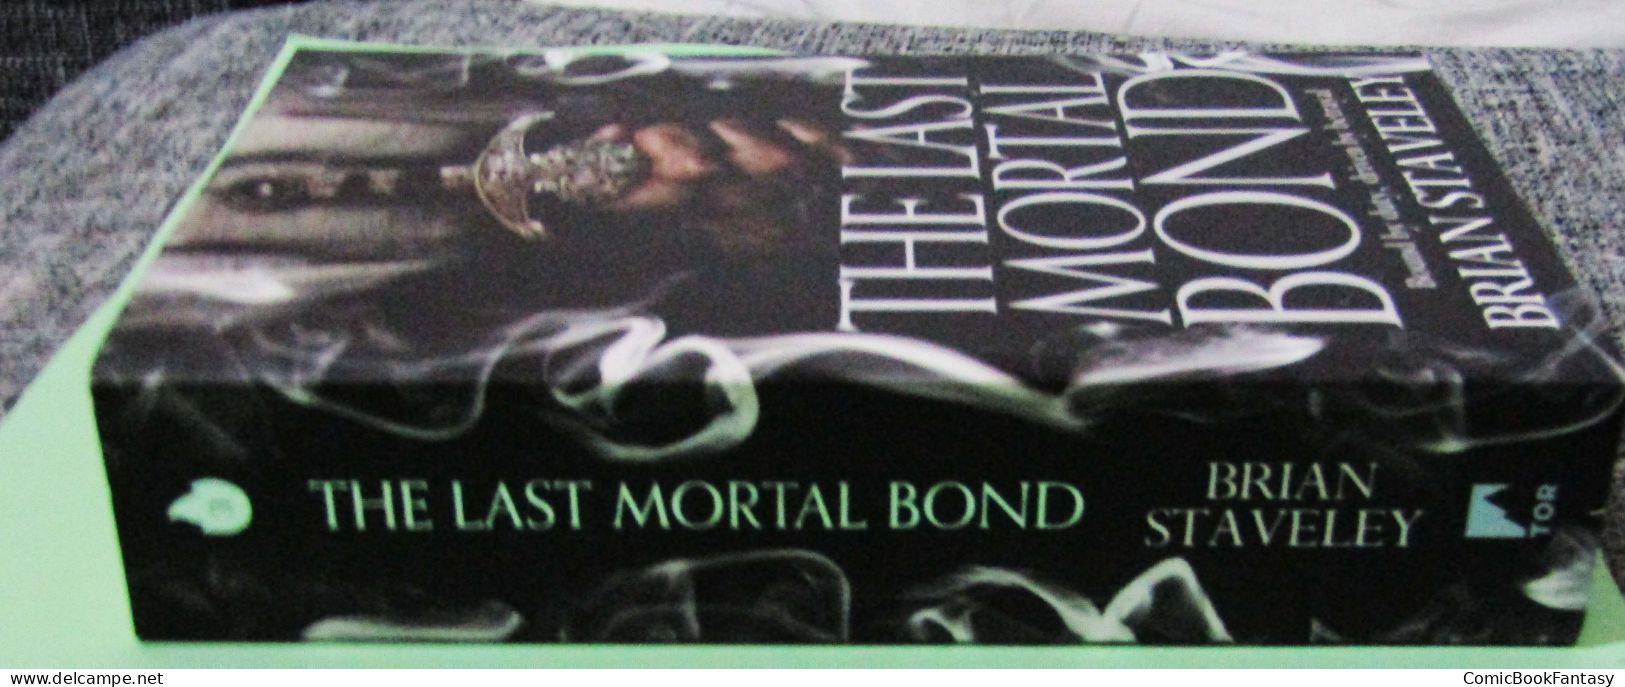 The Last Mortal Bond By Brian Staveley (Paperback, 2016) New (read Description) - Action/ Aventure